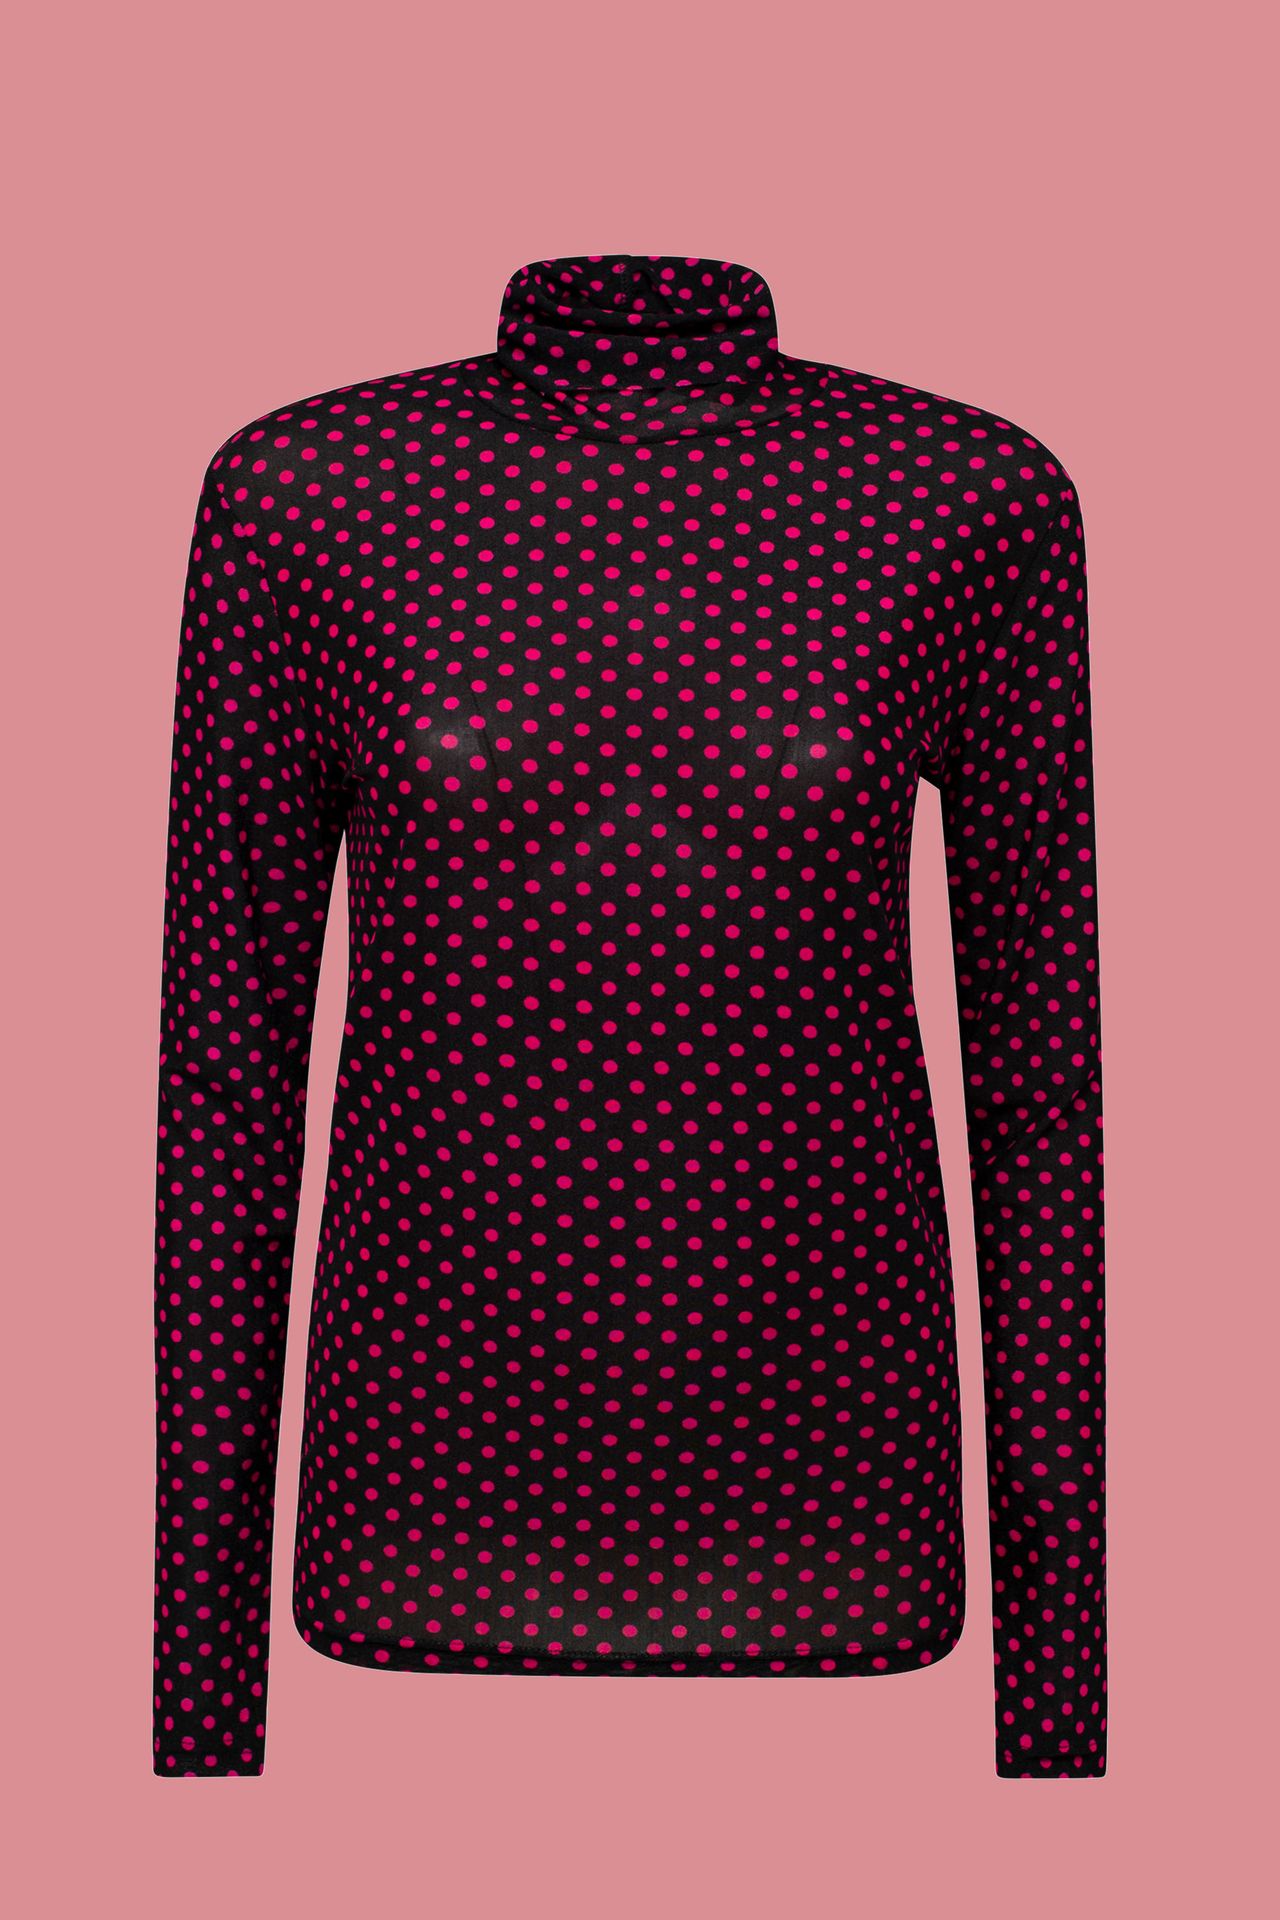 Norah Shirt zwart roze black/pink 213310-039